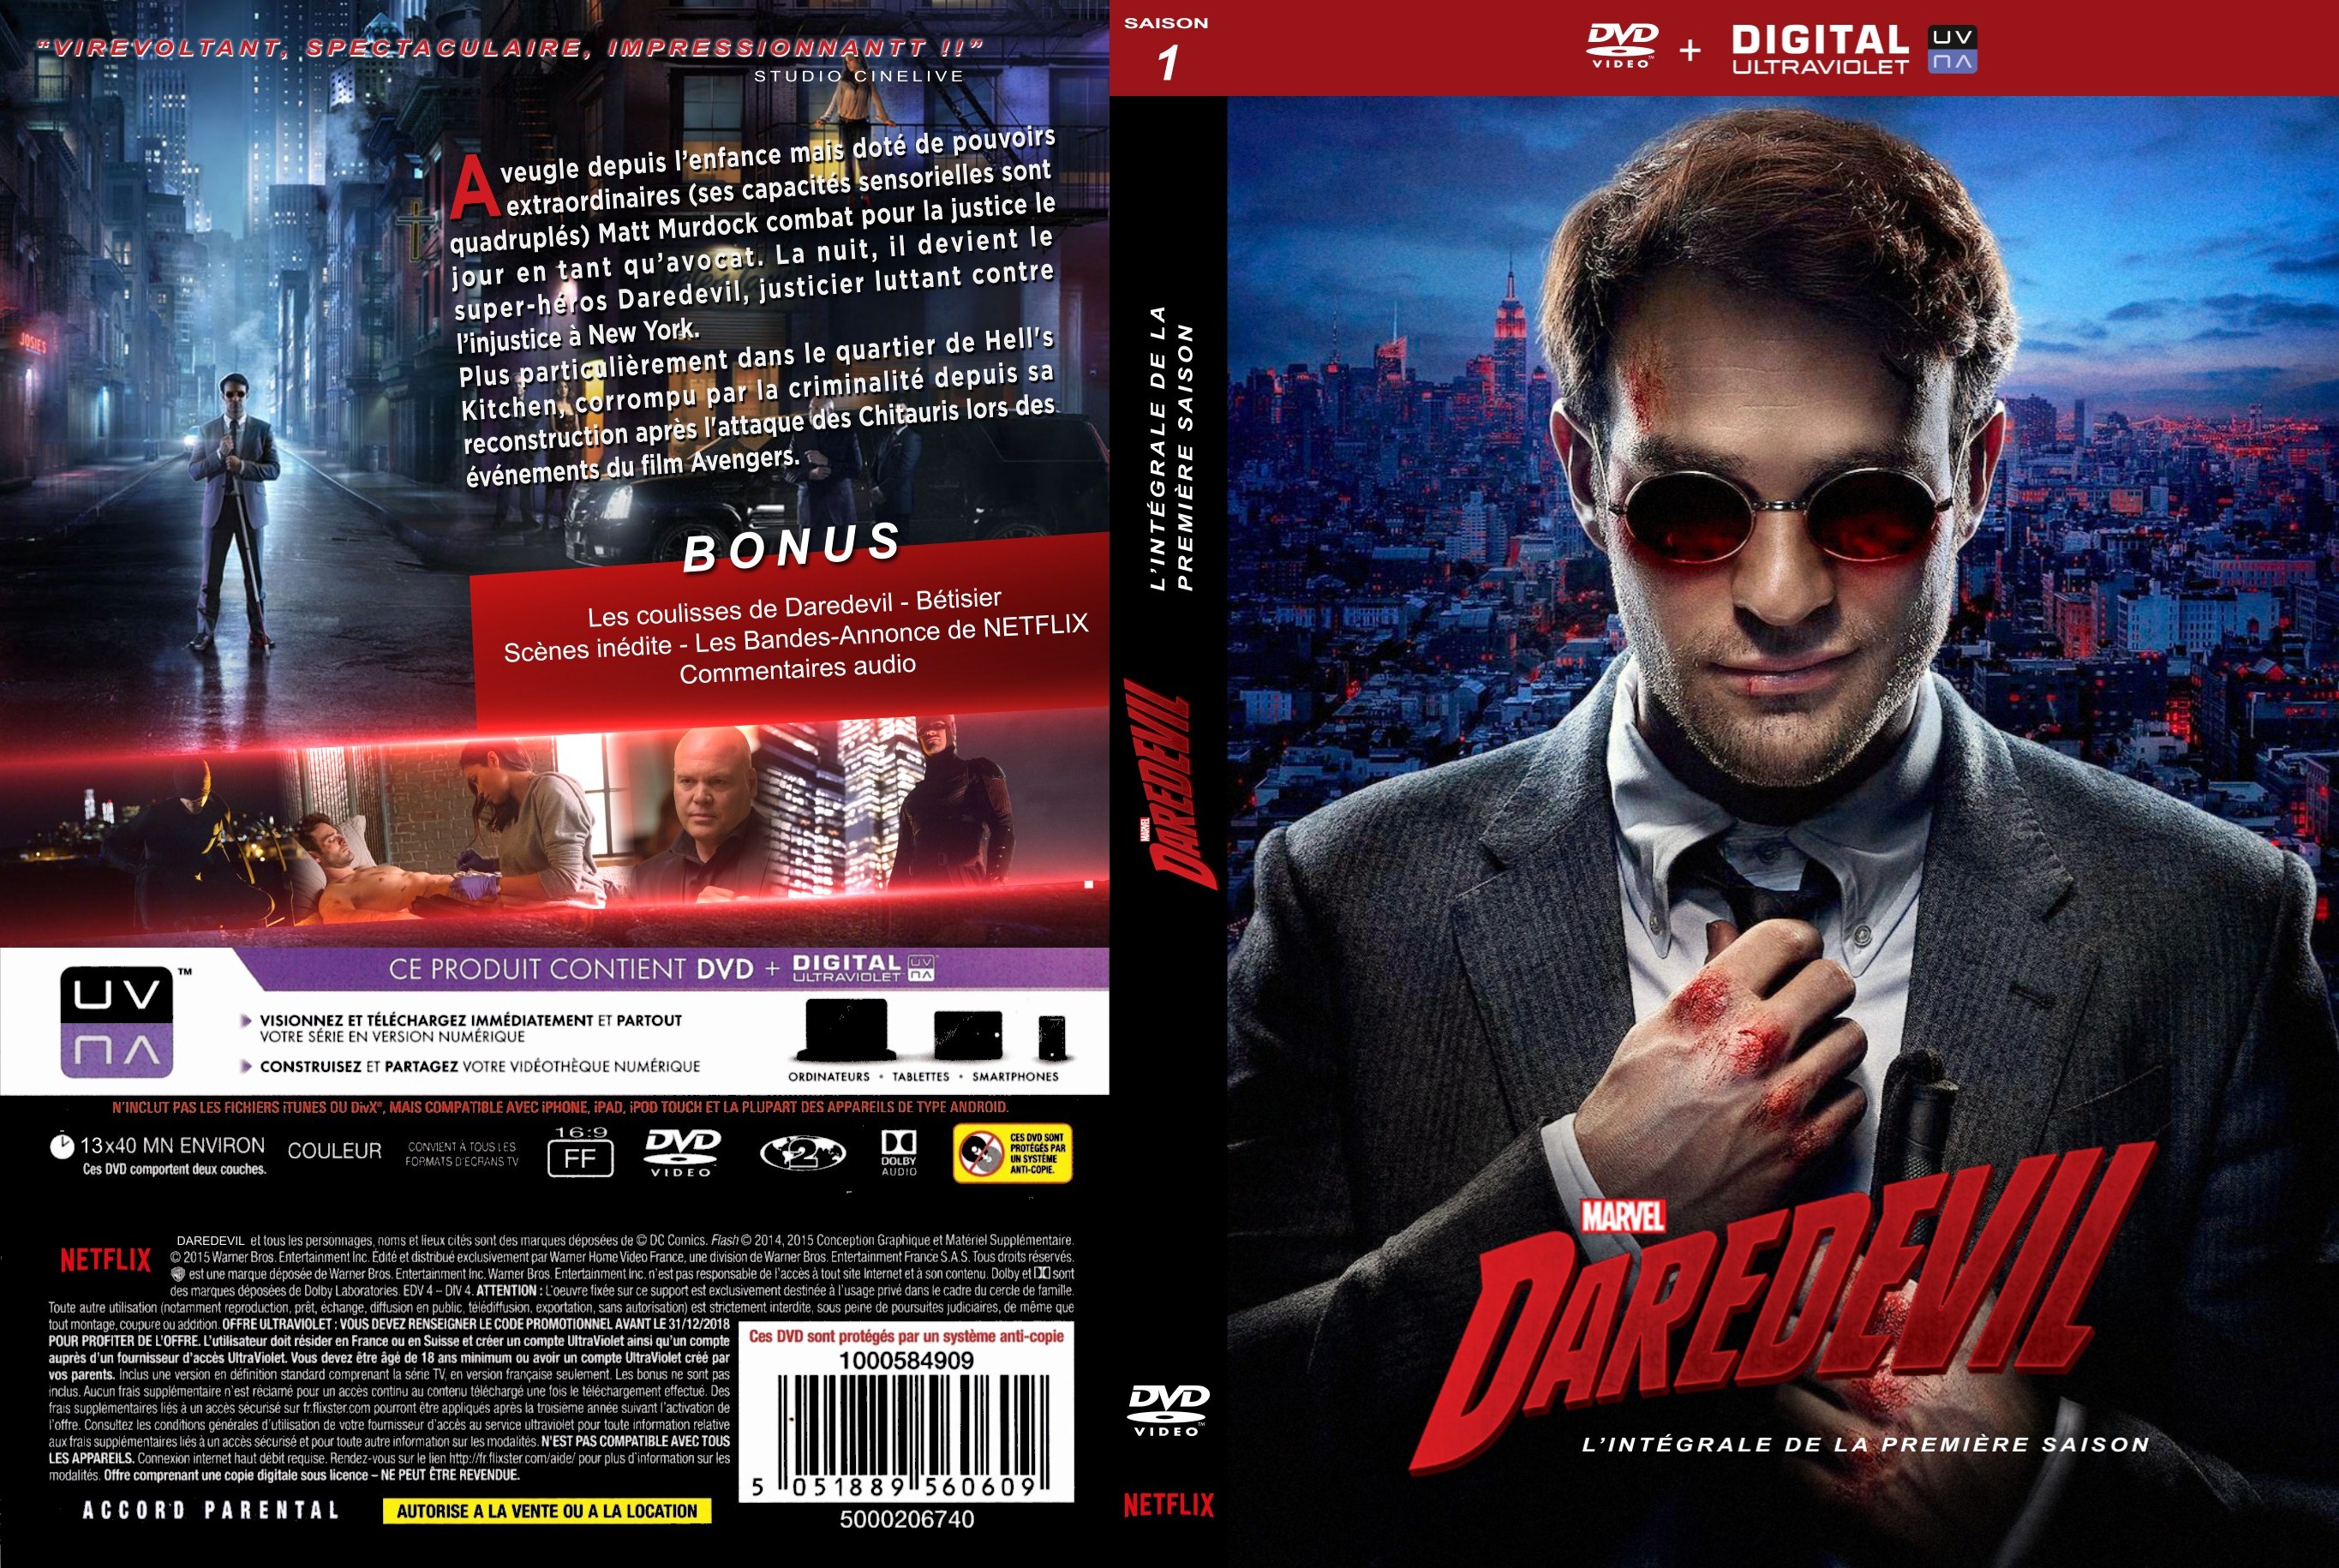 Jaquette DVD Daredevil Saison 1 custom v2